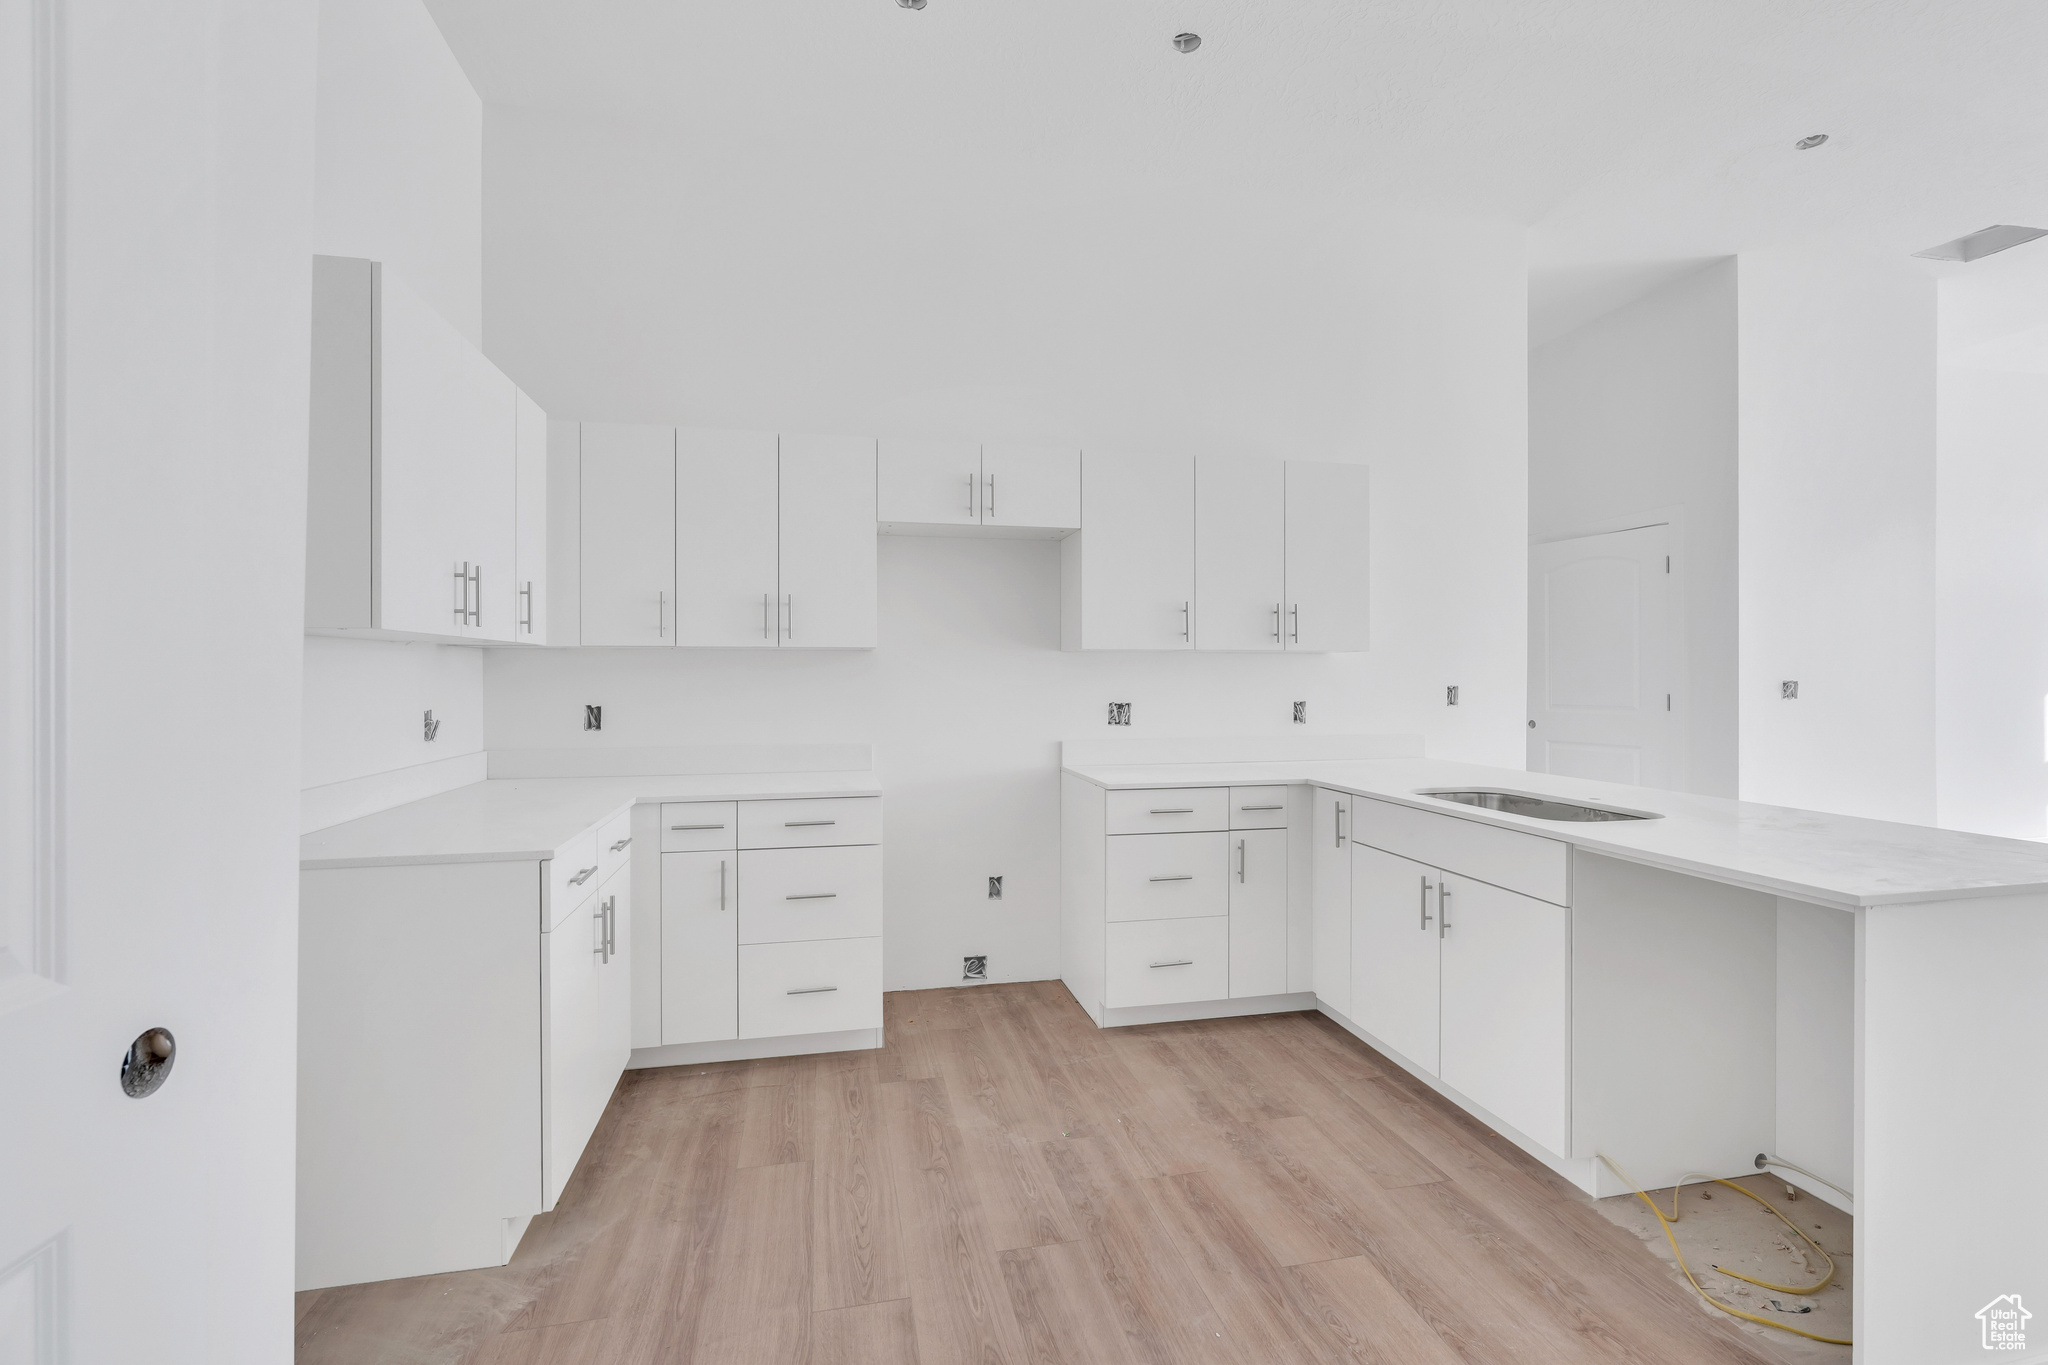 Bright white modern kitchen with quartz counters and tile backsplash.